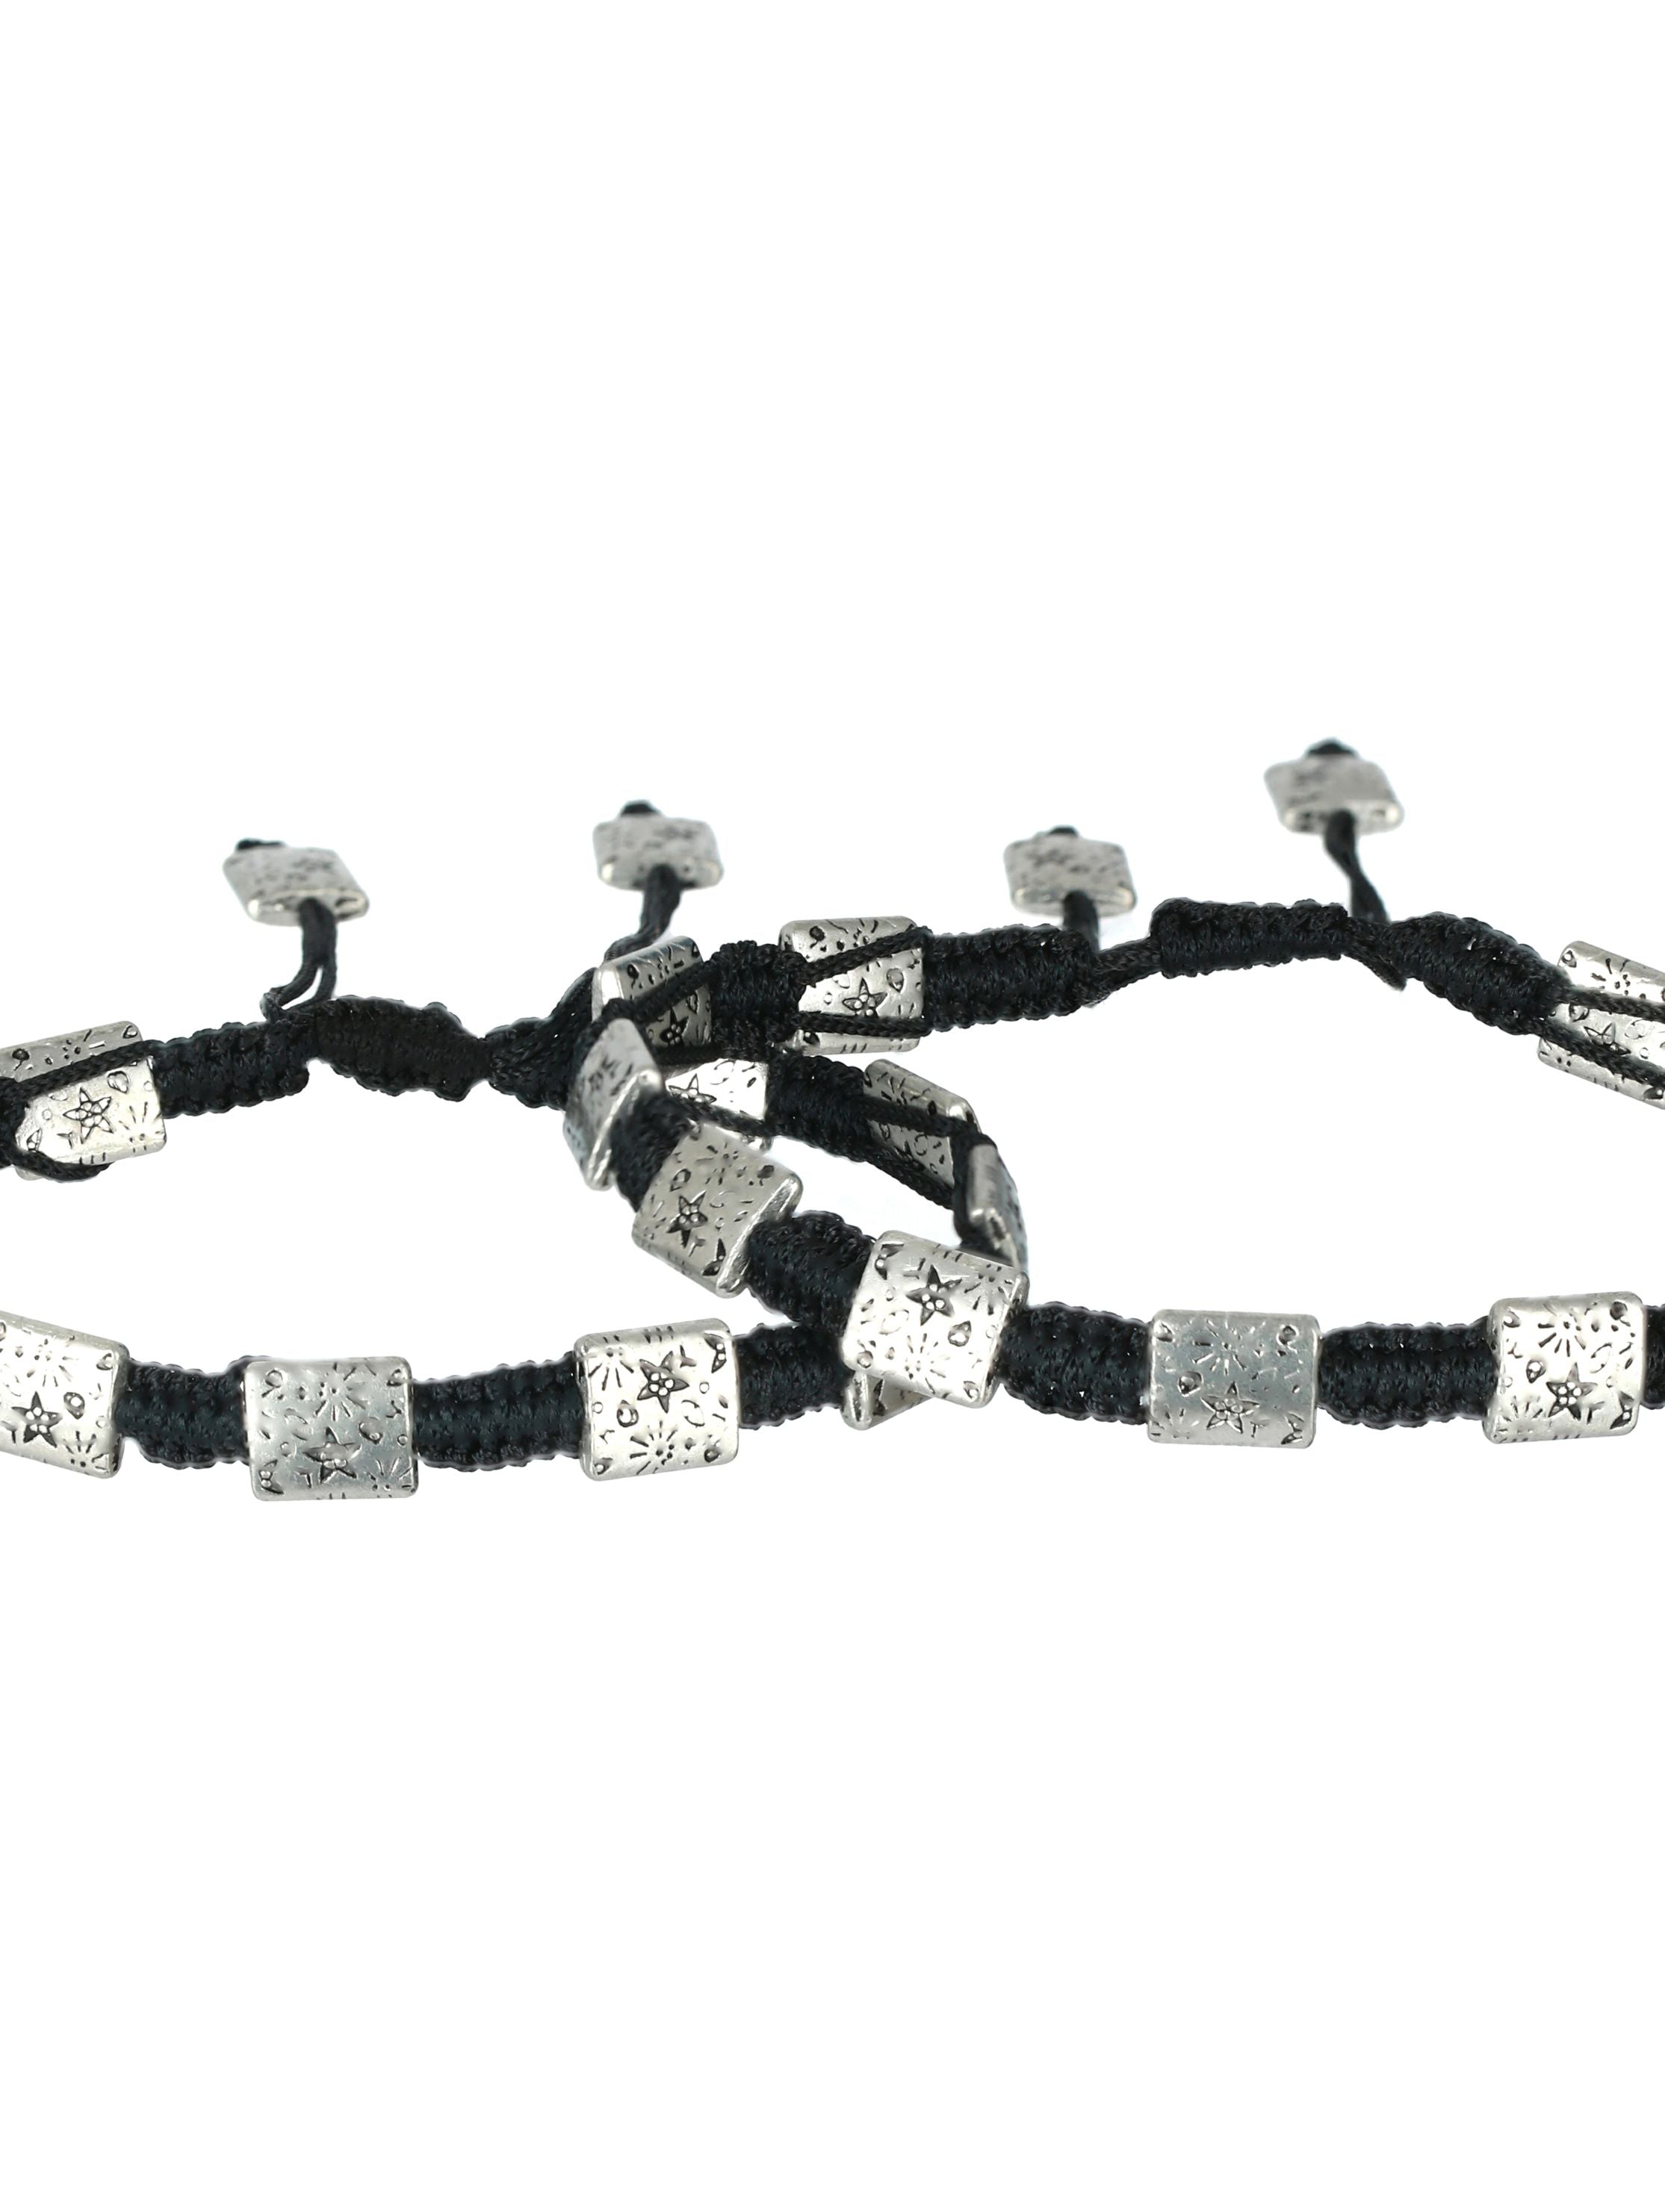 Set of 2 Rectangular Black Thread Boho style Anklets/Bracelet